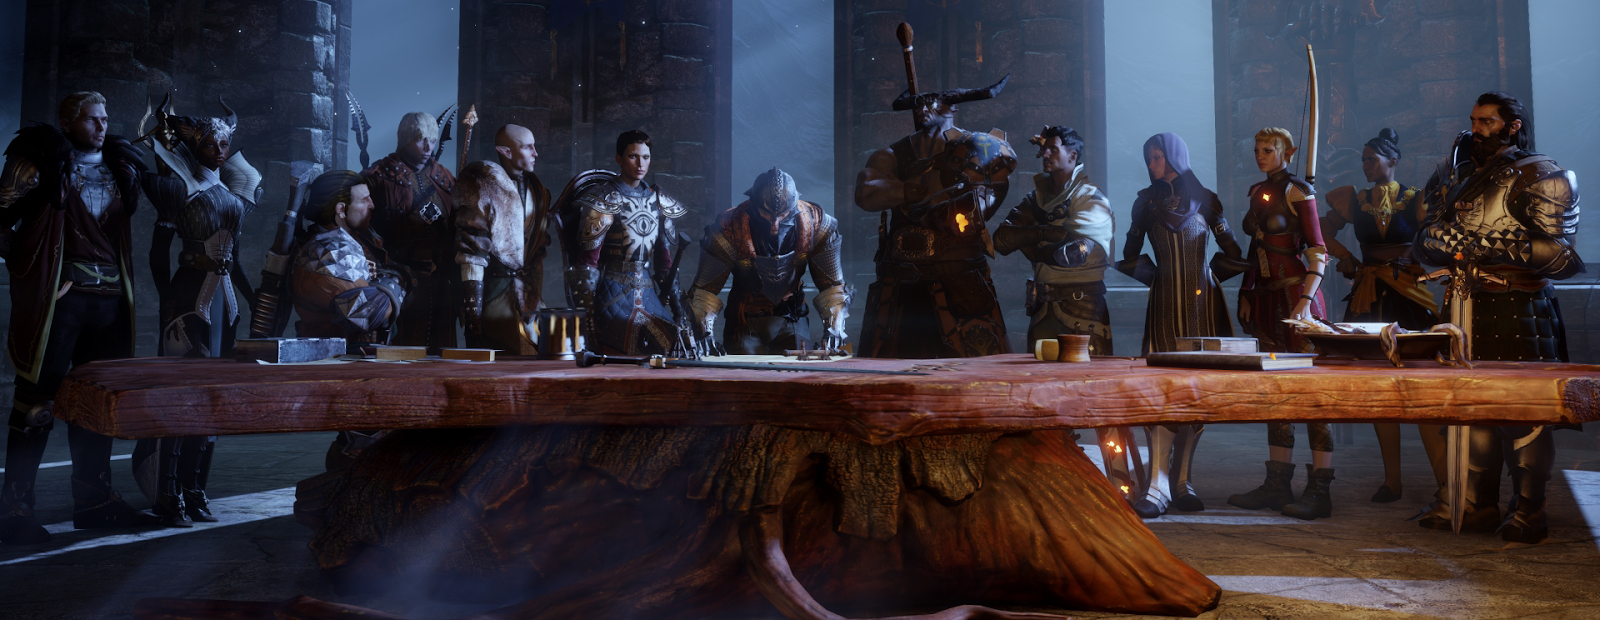 Análise: Dragon Age: Inquisition (Multi) revive e amplia o